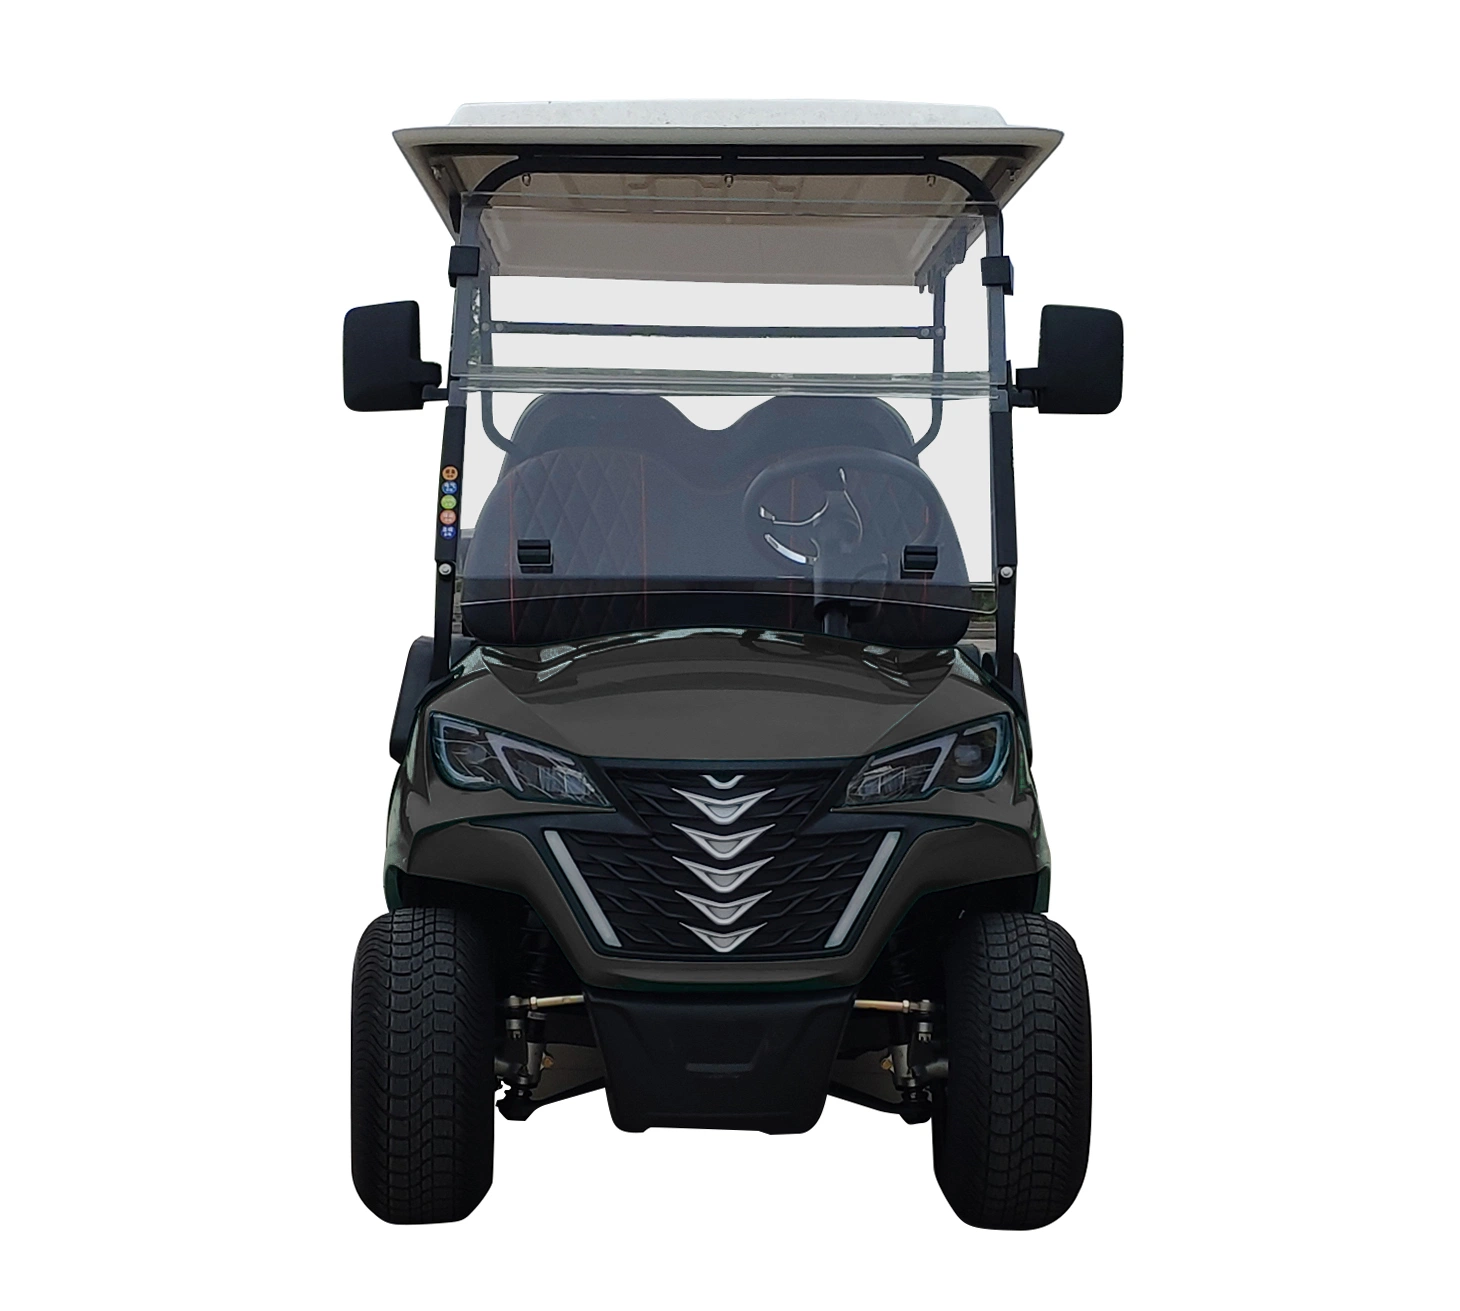 Großhandelsmarkt Lithium Batterie Golf Auto Elektro Golf Cart Golf Buggy Forge G4+2